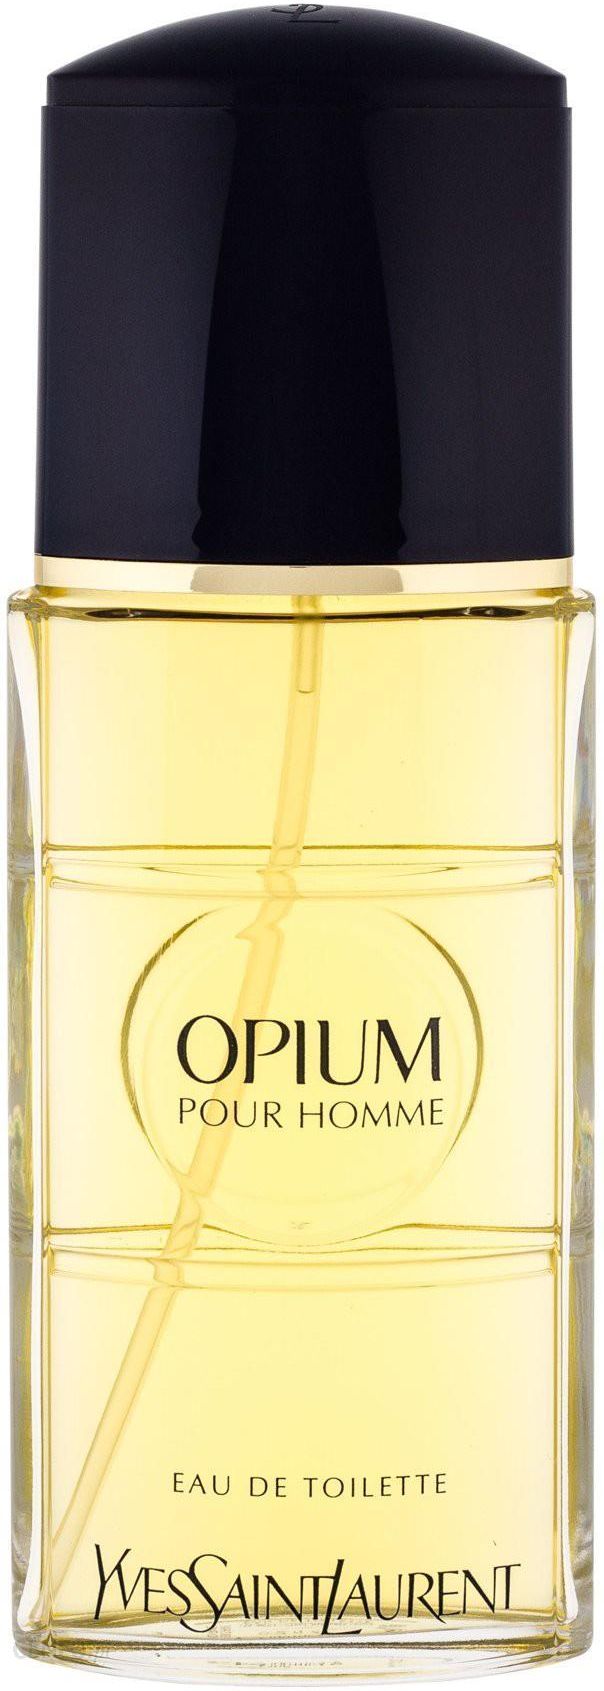 Opium homme. Opium pour homme Yves Saint Laurent для мужчин. Туалетная вода Yves Saint Laurent Opium pour homme. Ив сен Лоран опиум Пур Хомм. Ив сен Лоран опиум мужской.